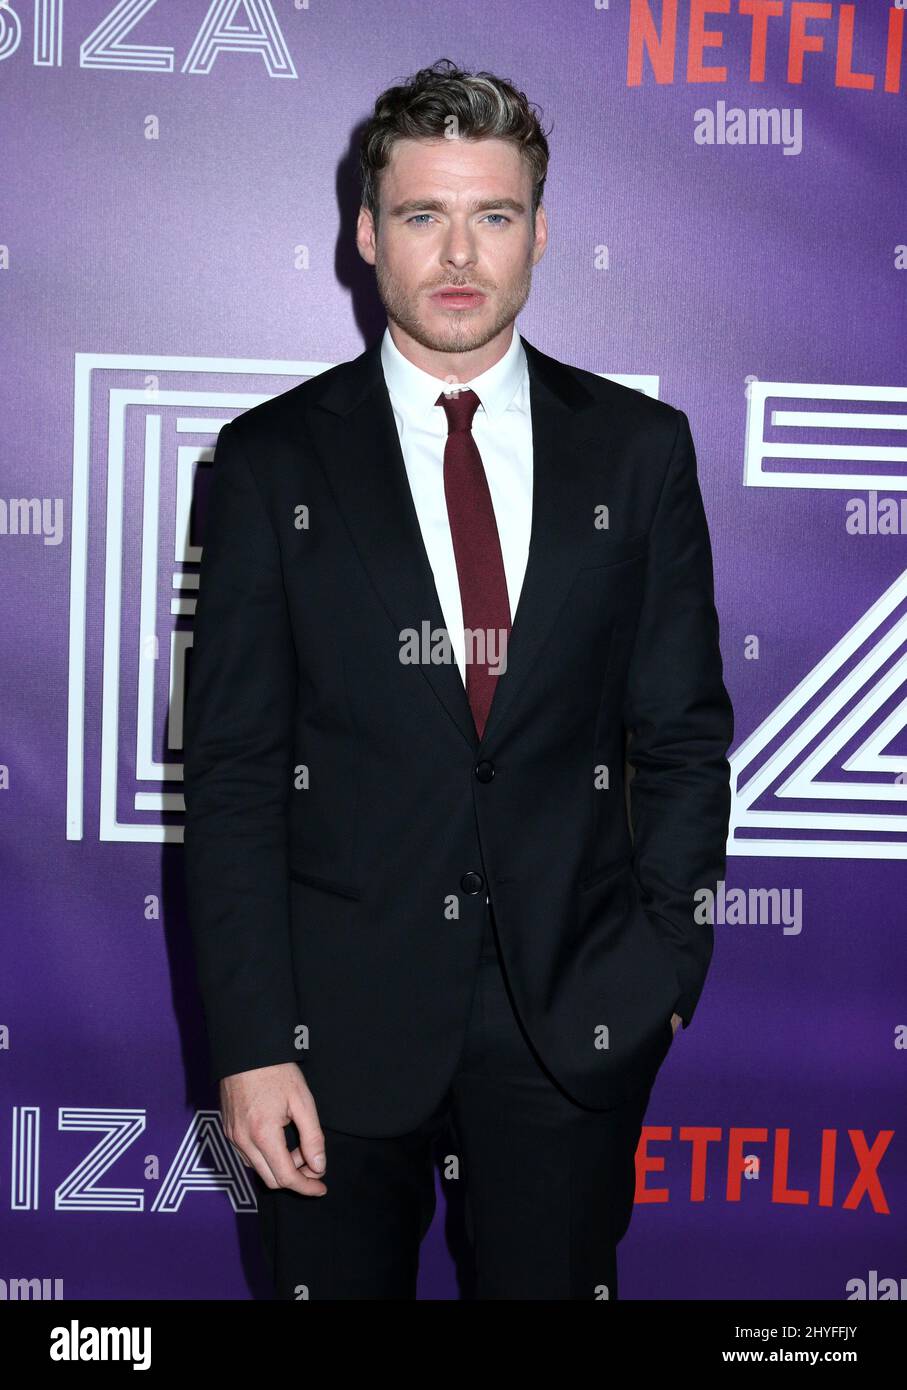 Richard Madden attending Netflix's 'Ibiza' premiere Held at the AMC ...